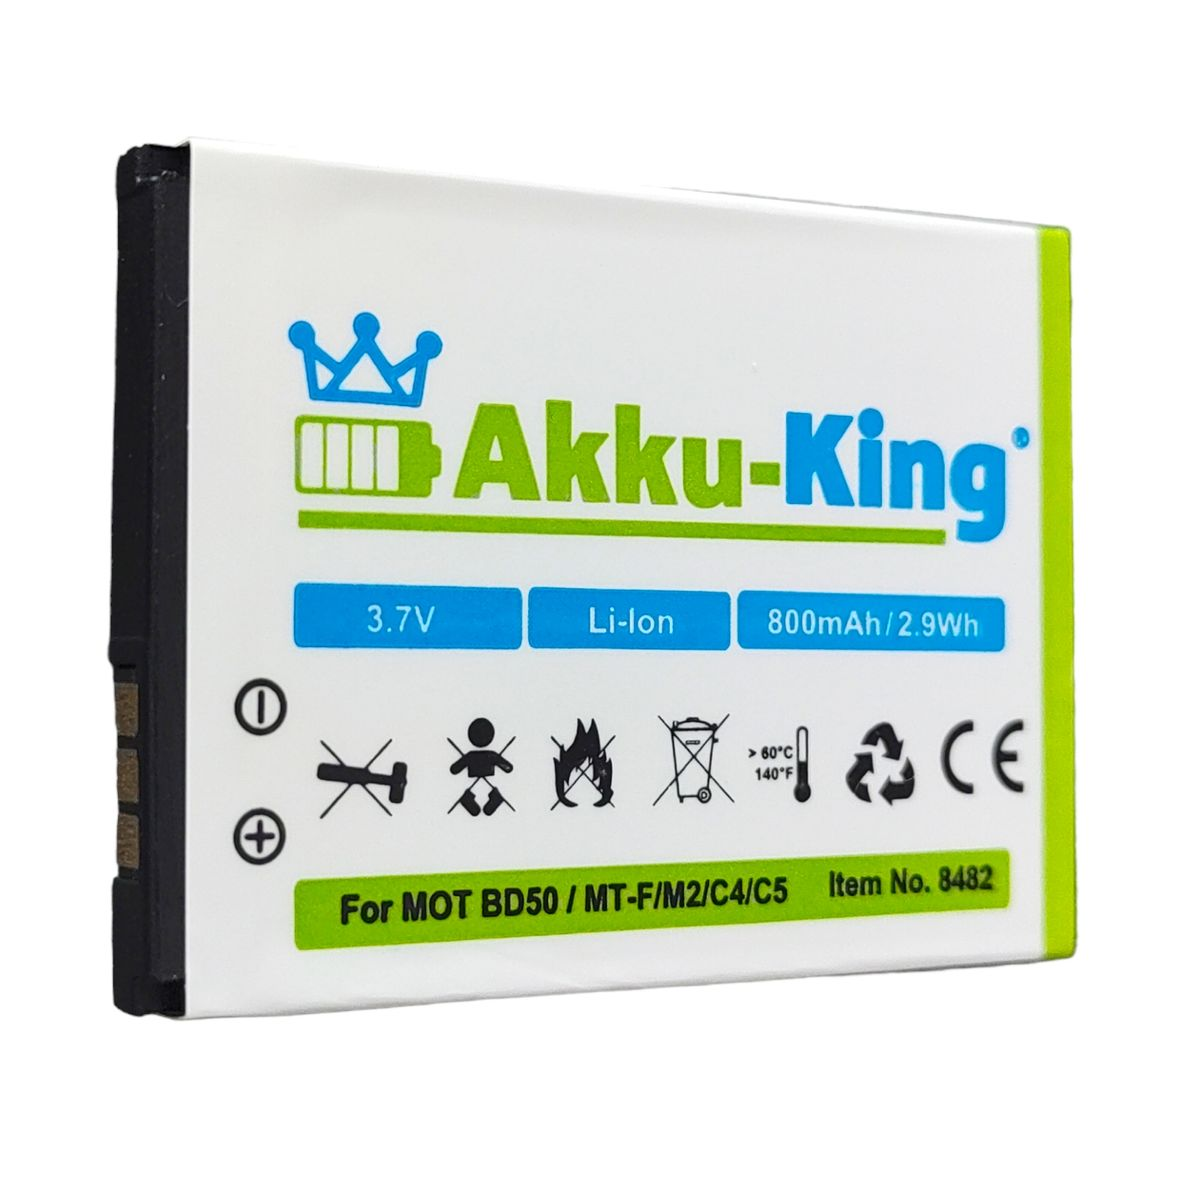 800mAh AKKU-KING Akku für Li-Ion AVM 312BAT006 Handy-Akku, Volt, 3.7